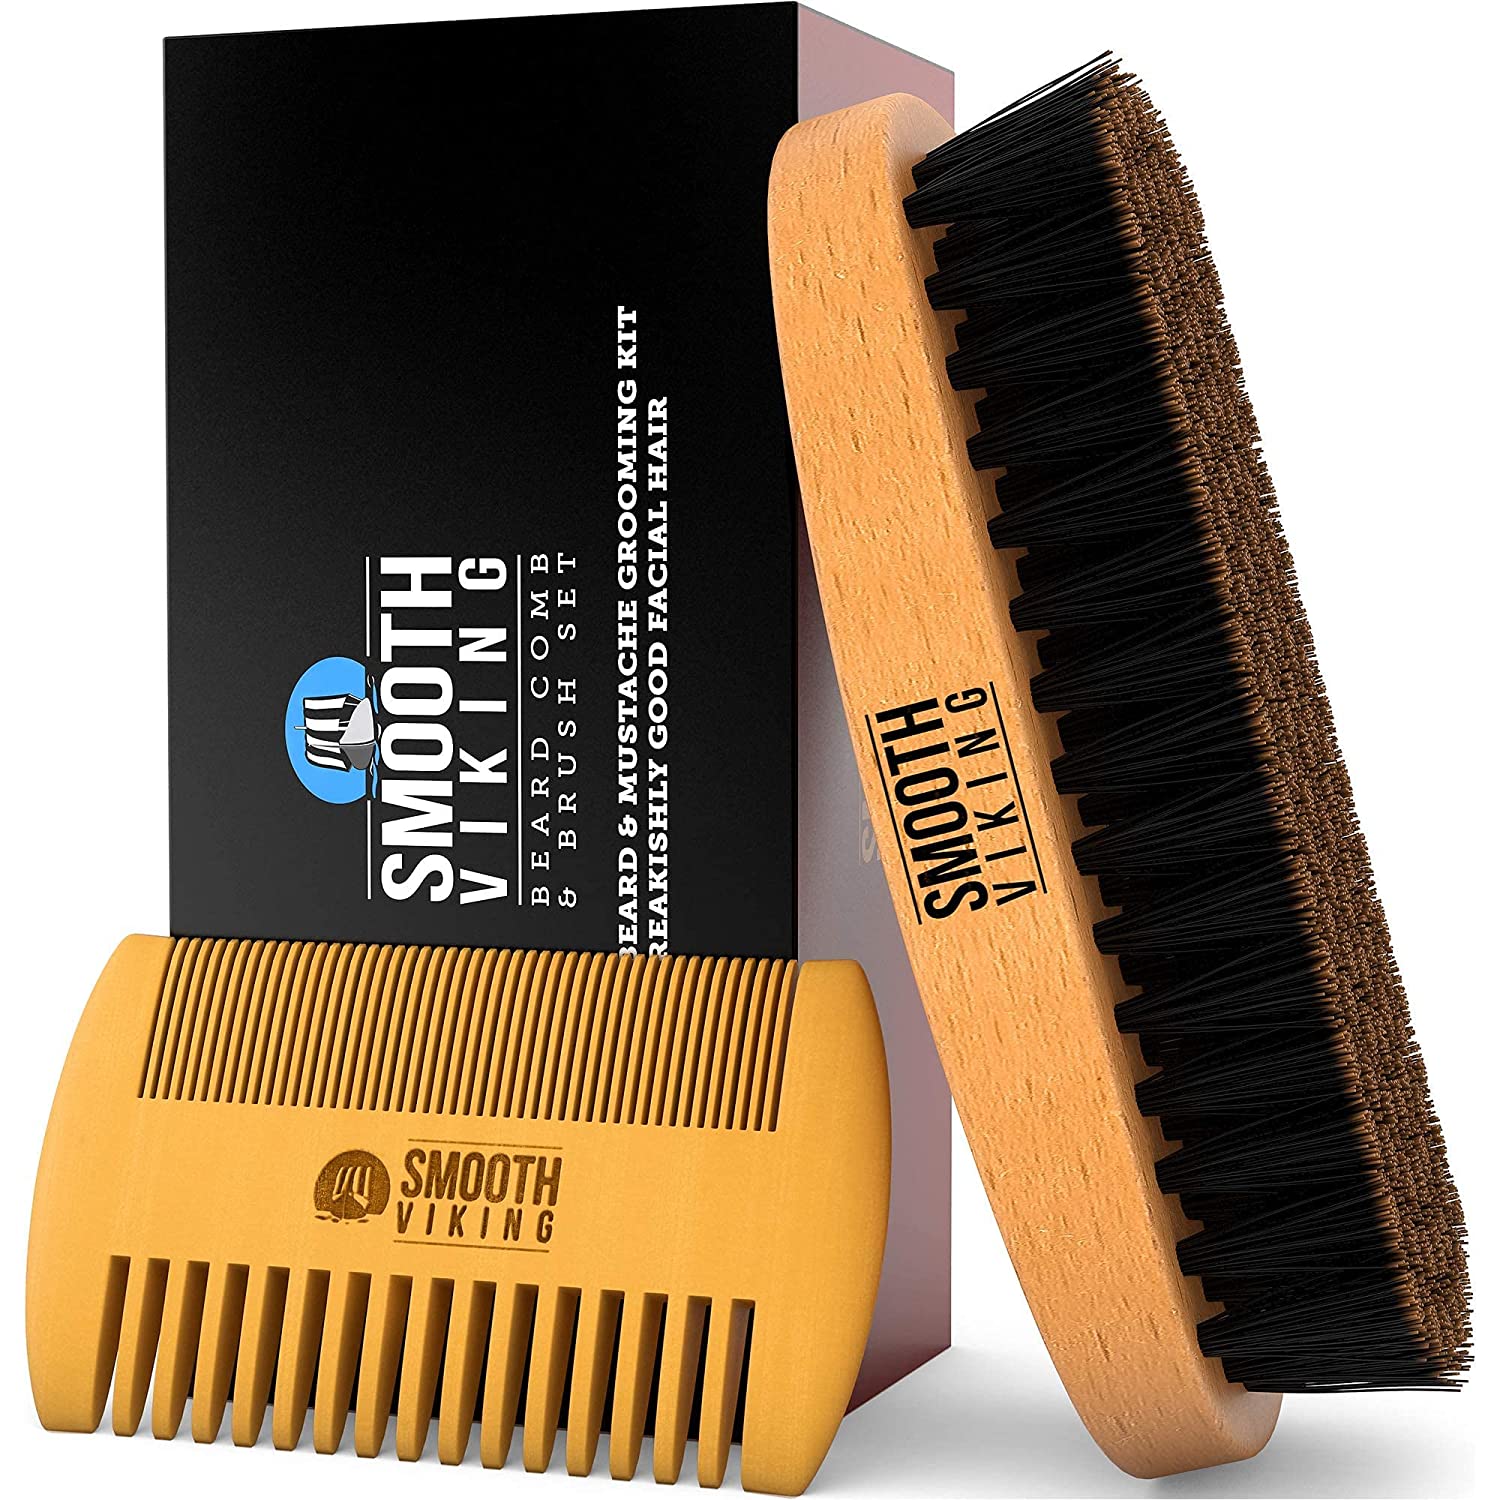 smooth viking beard brush and comb